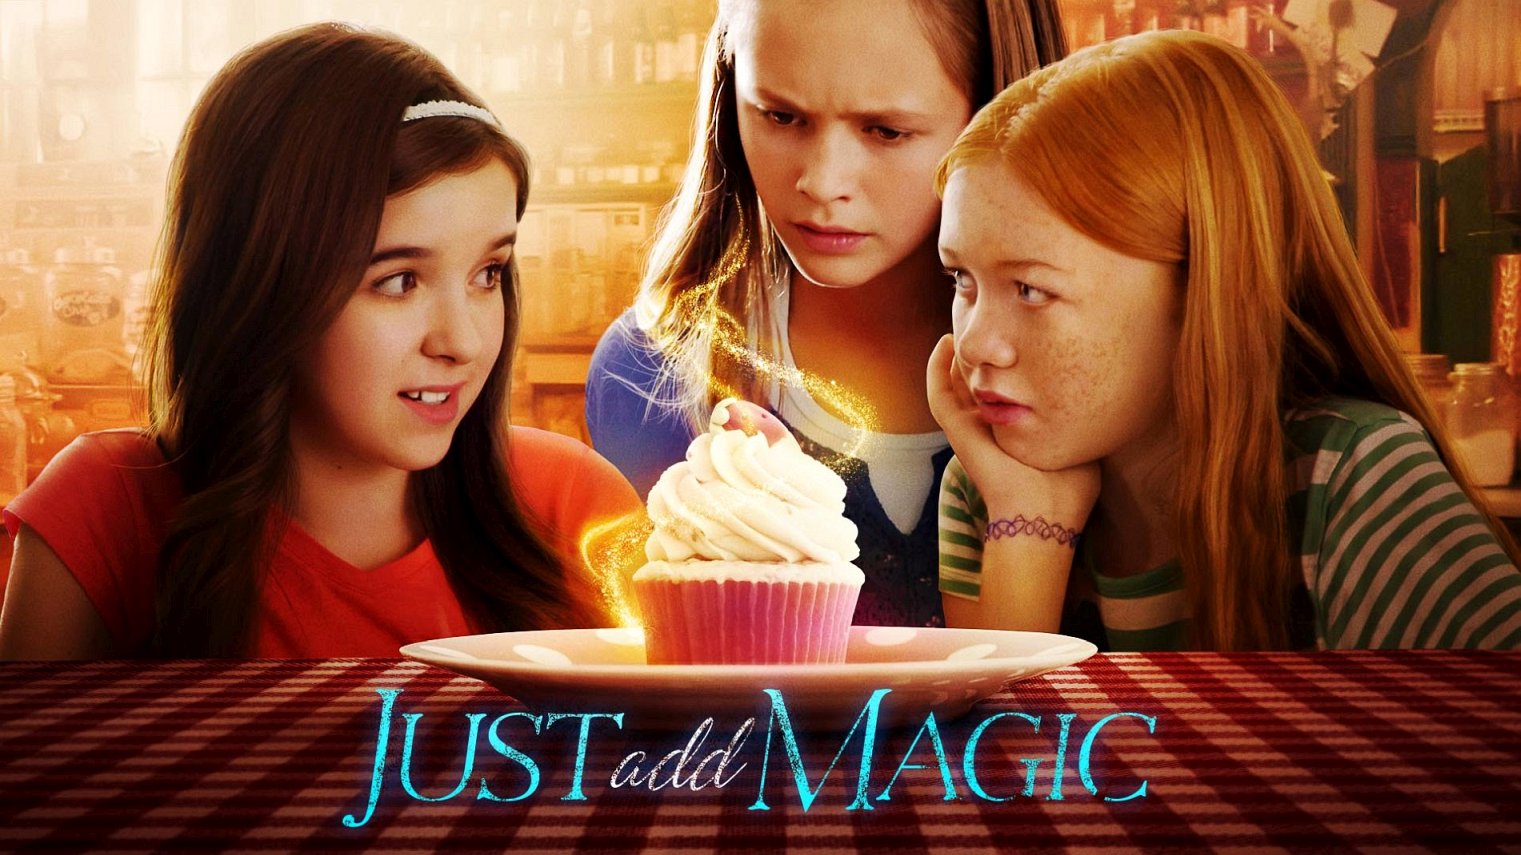 cast of Just Add Magic season 2